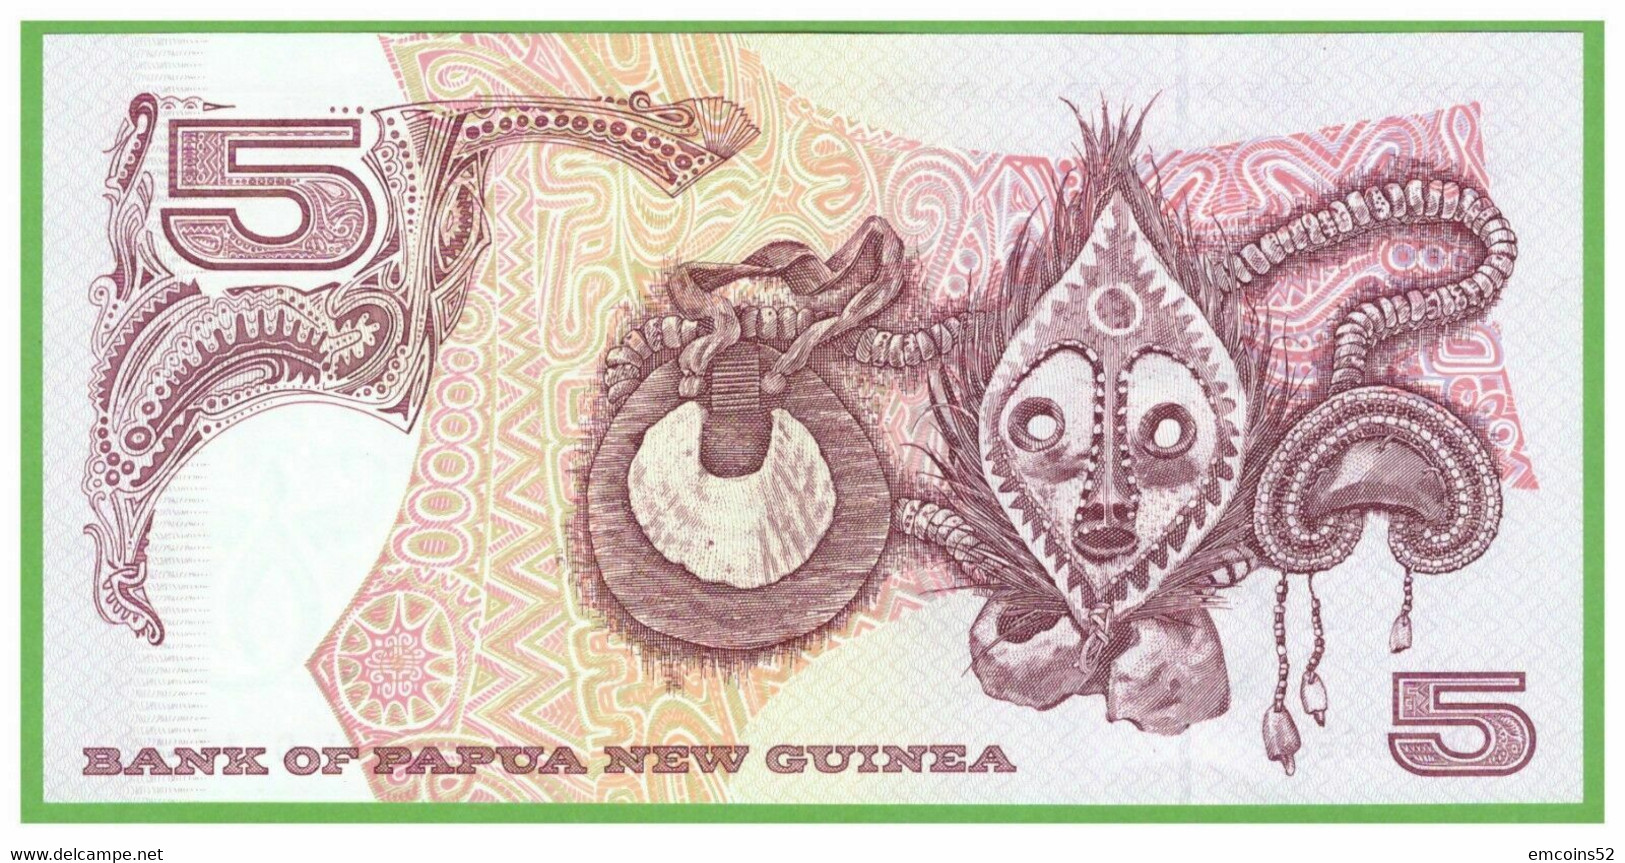 PAPUA NEW GUINEA 5 DOLLARS 2000  P-13c  UNC - Papua New Guinea